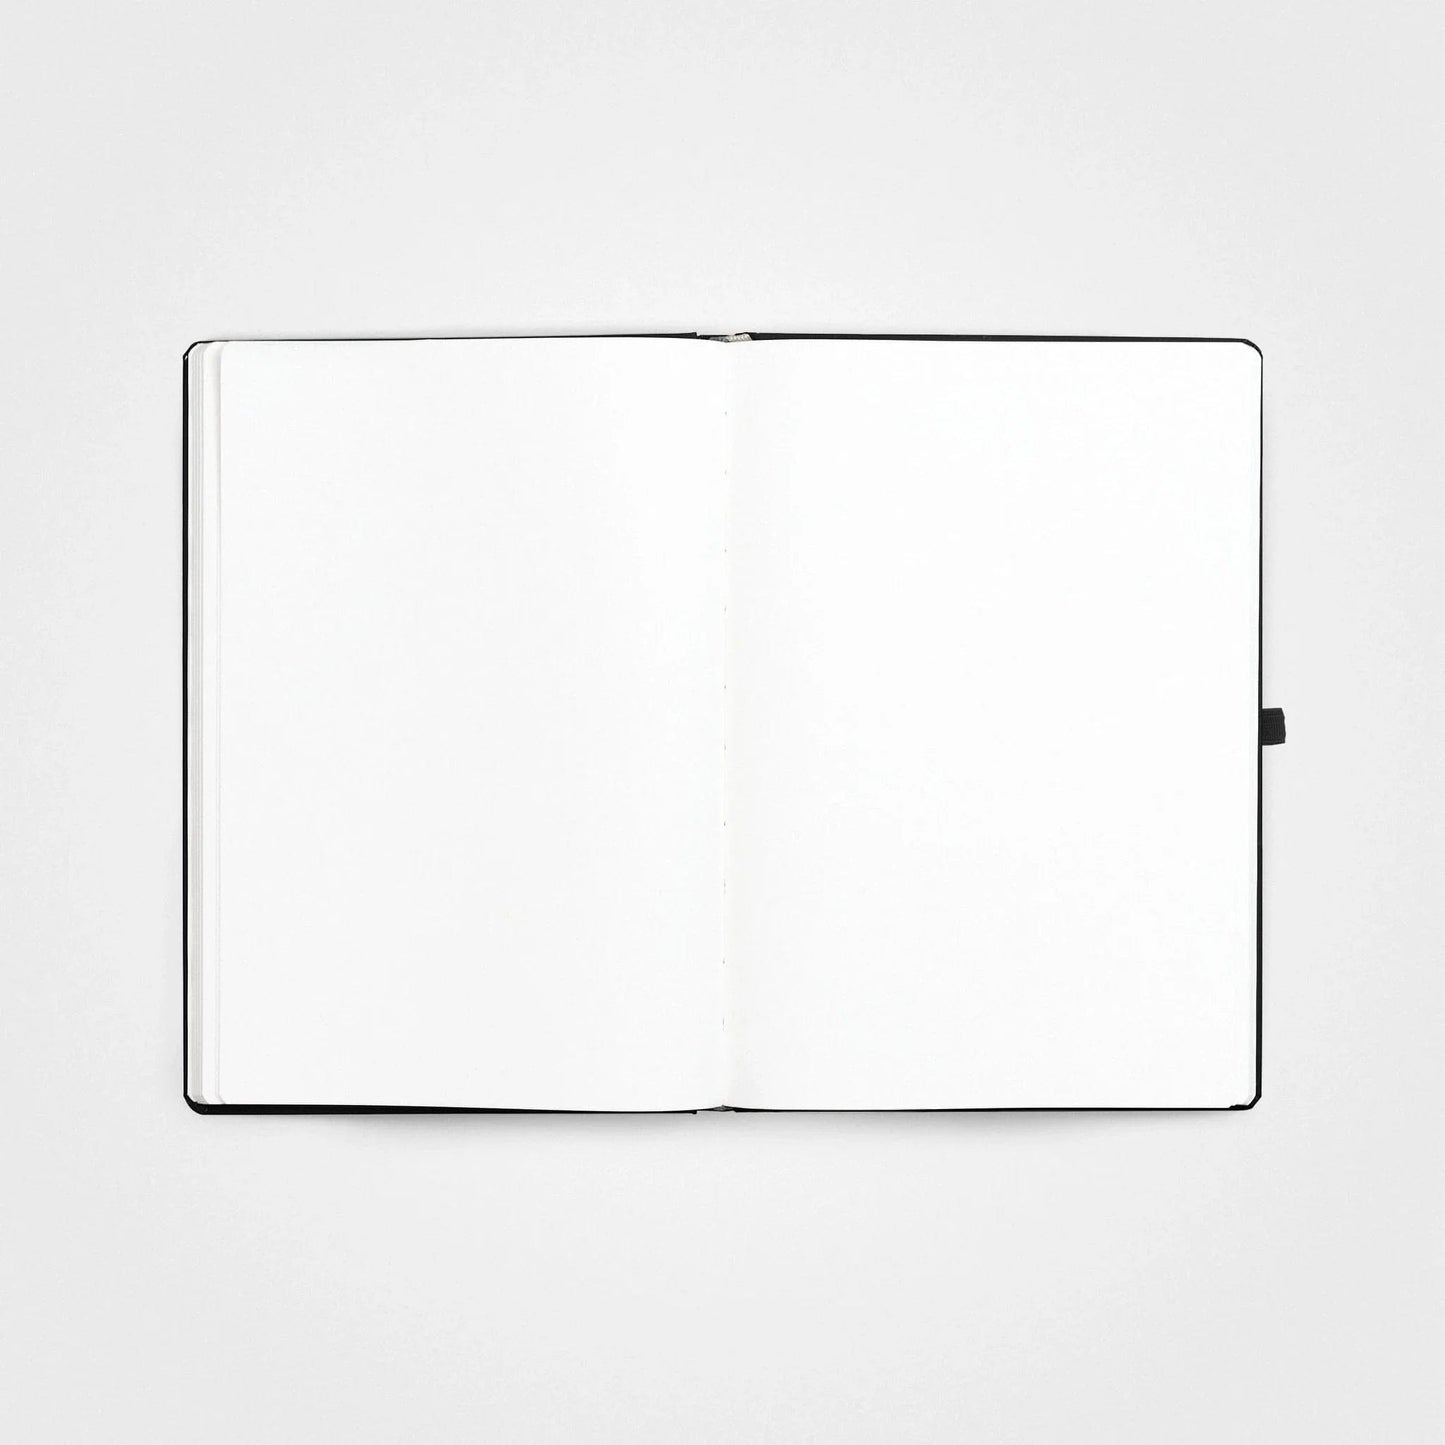 Steenpapier Notebook - A5 Hardcover, Charcoal black